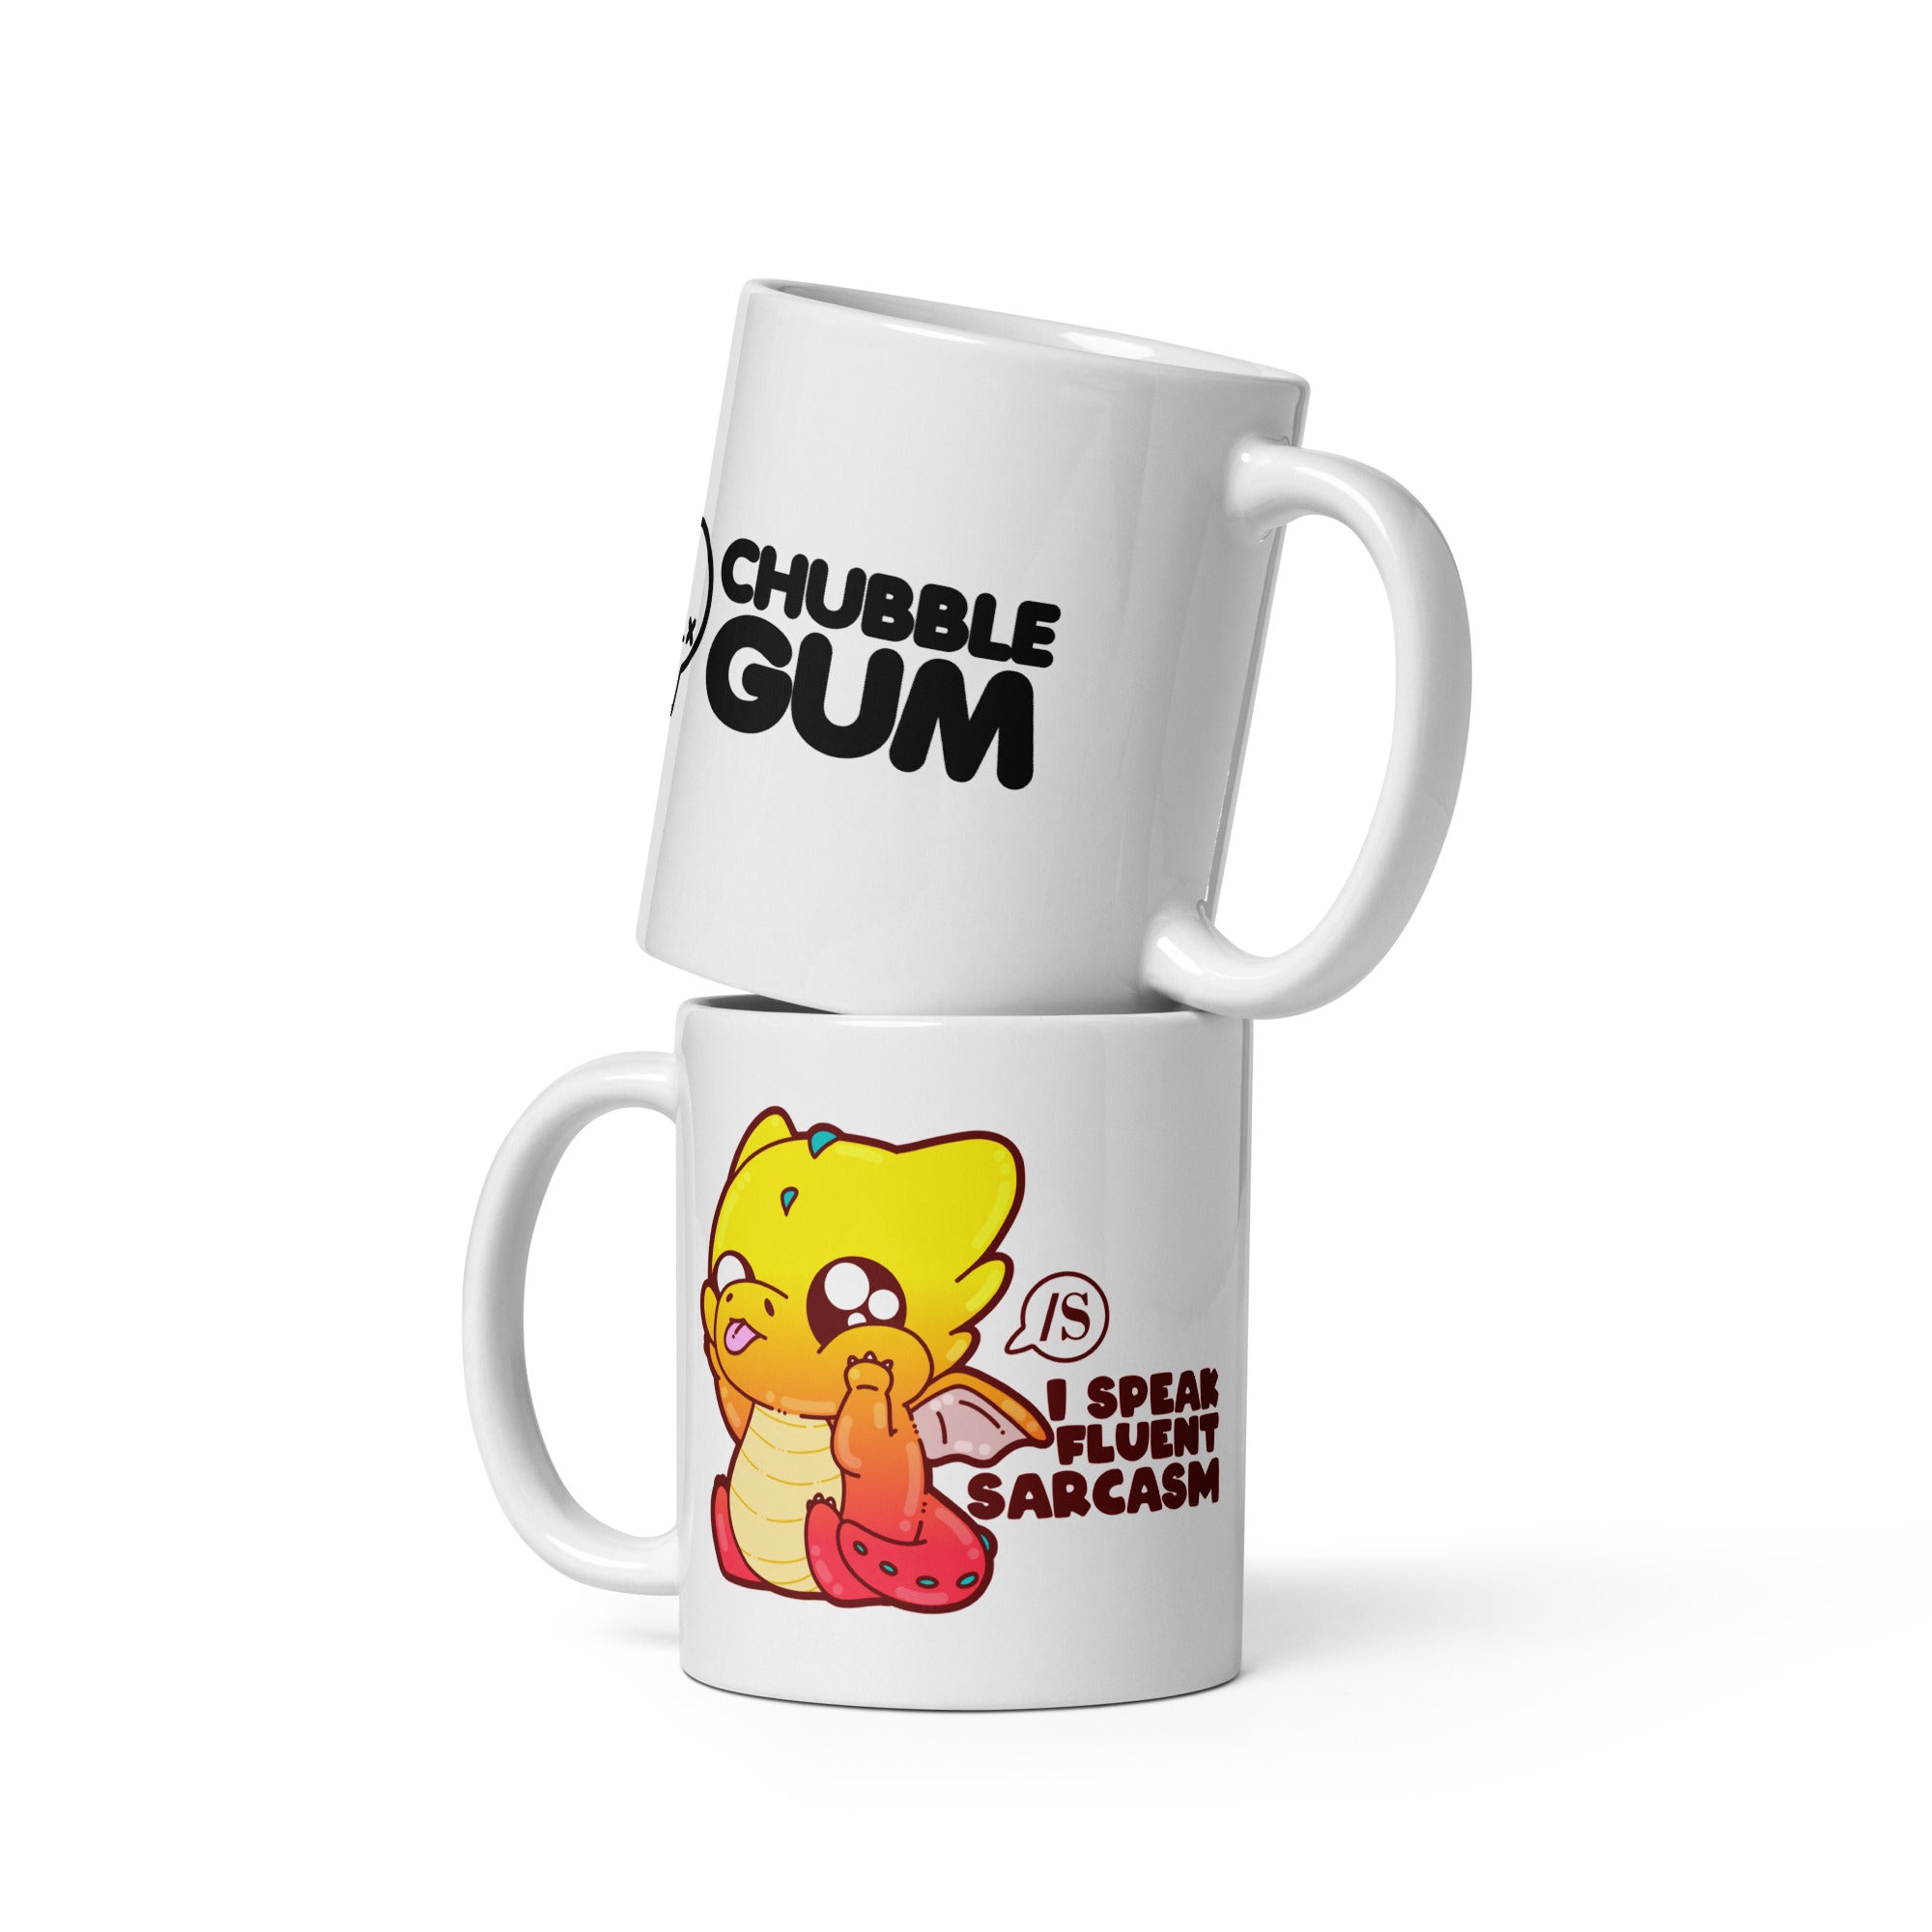 I SPEAK FLUENT SARCASM - Coffee Mug - ChubbleGumLLC